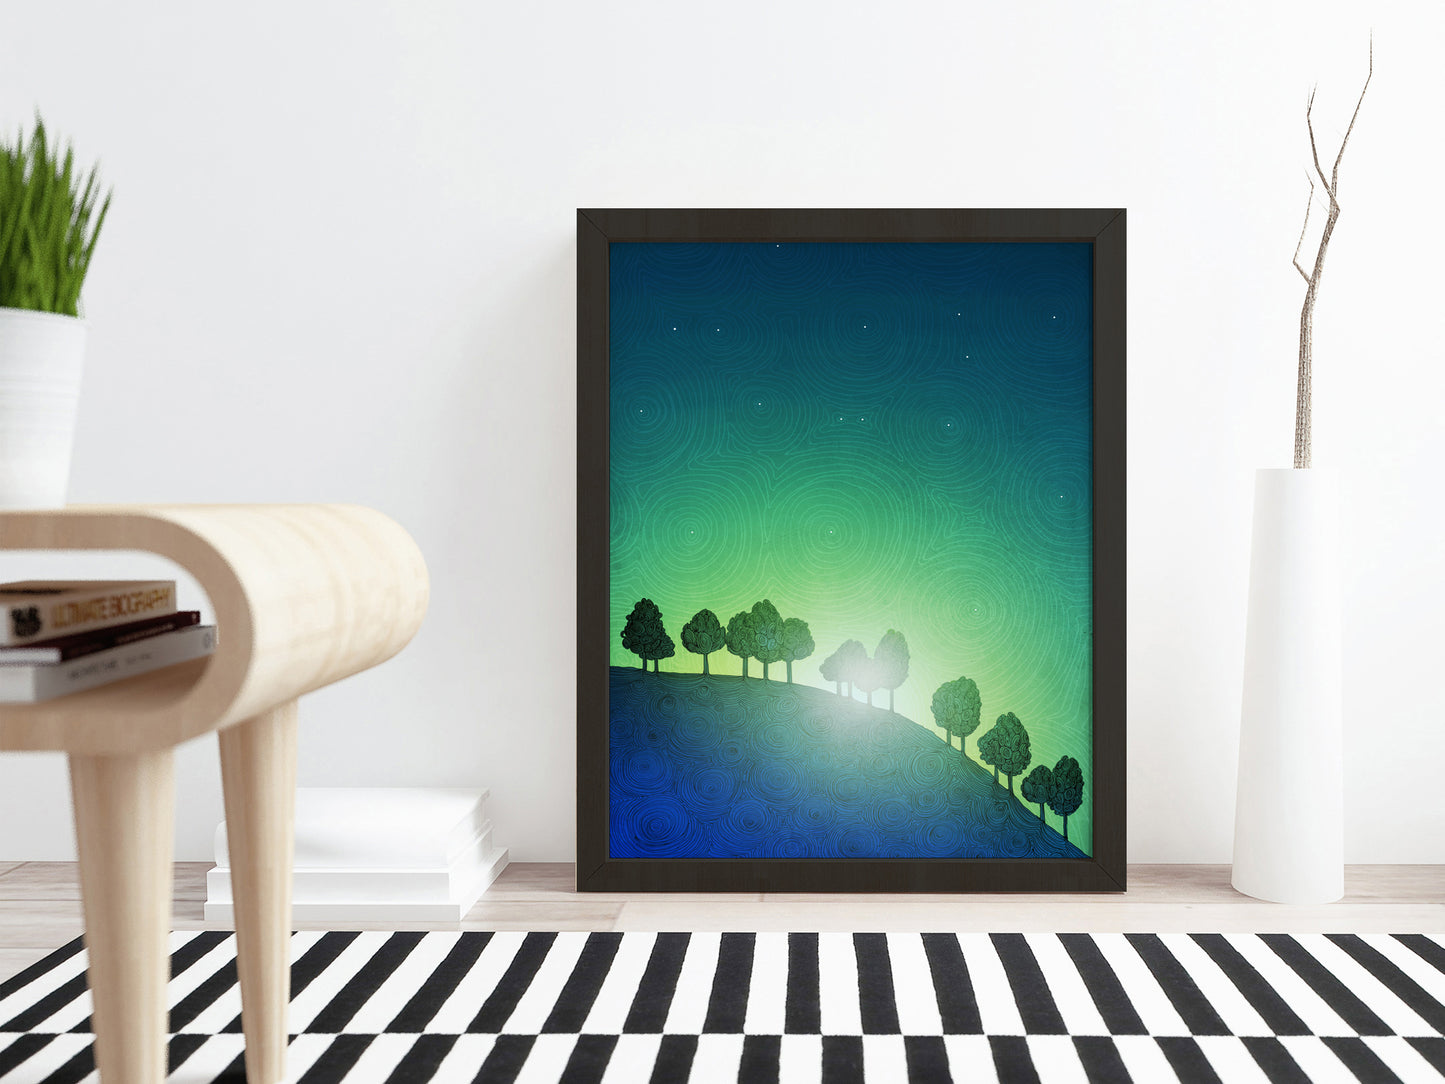 First streak of dawn (green) - Framed Art Print